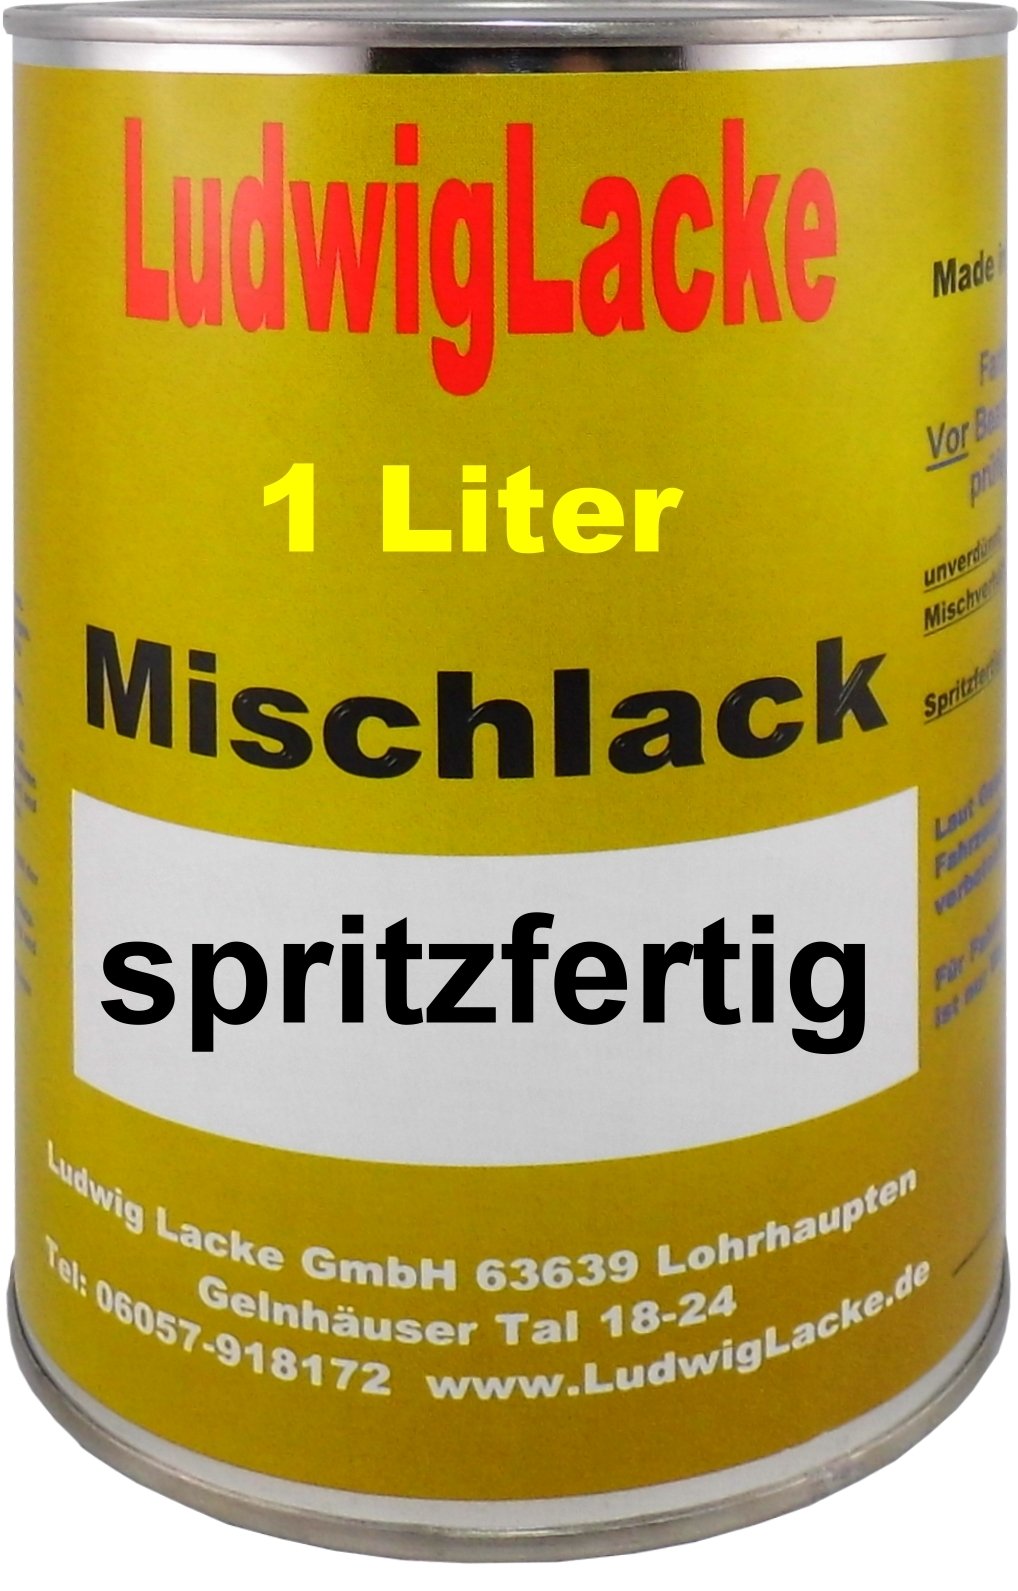 Ludwig Lacke 1 Liter spritzfertiger Autolack für Audi Akojasilber Farbton: LY7H Bj. 2002-2010 von Ludwiglacke